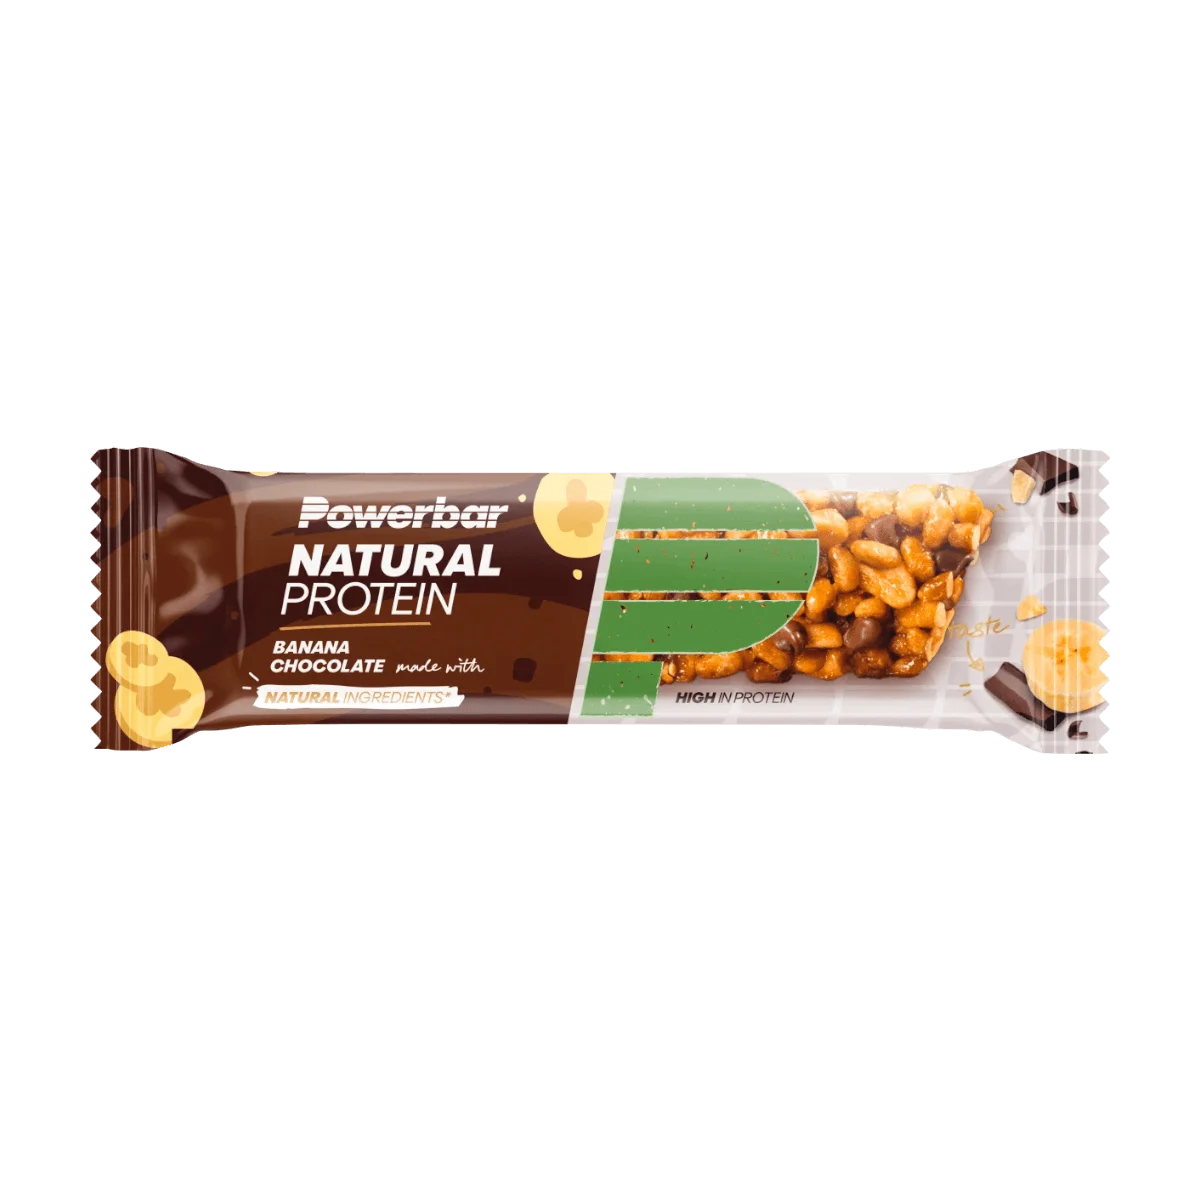 PowerBar Proteinriegel 30% Natural Protein, Banana Chocolate, 40 g